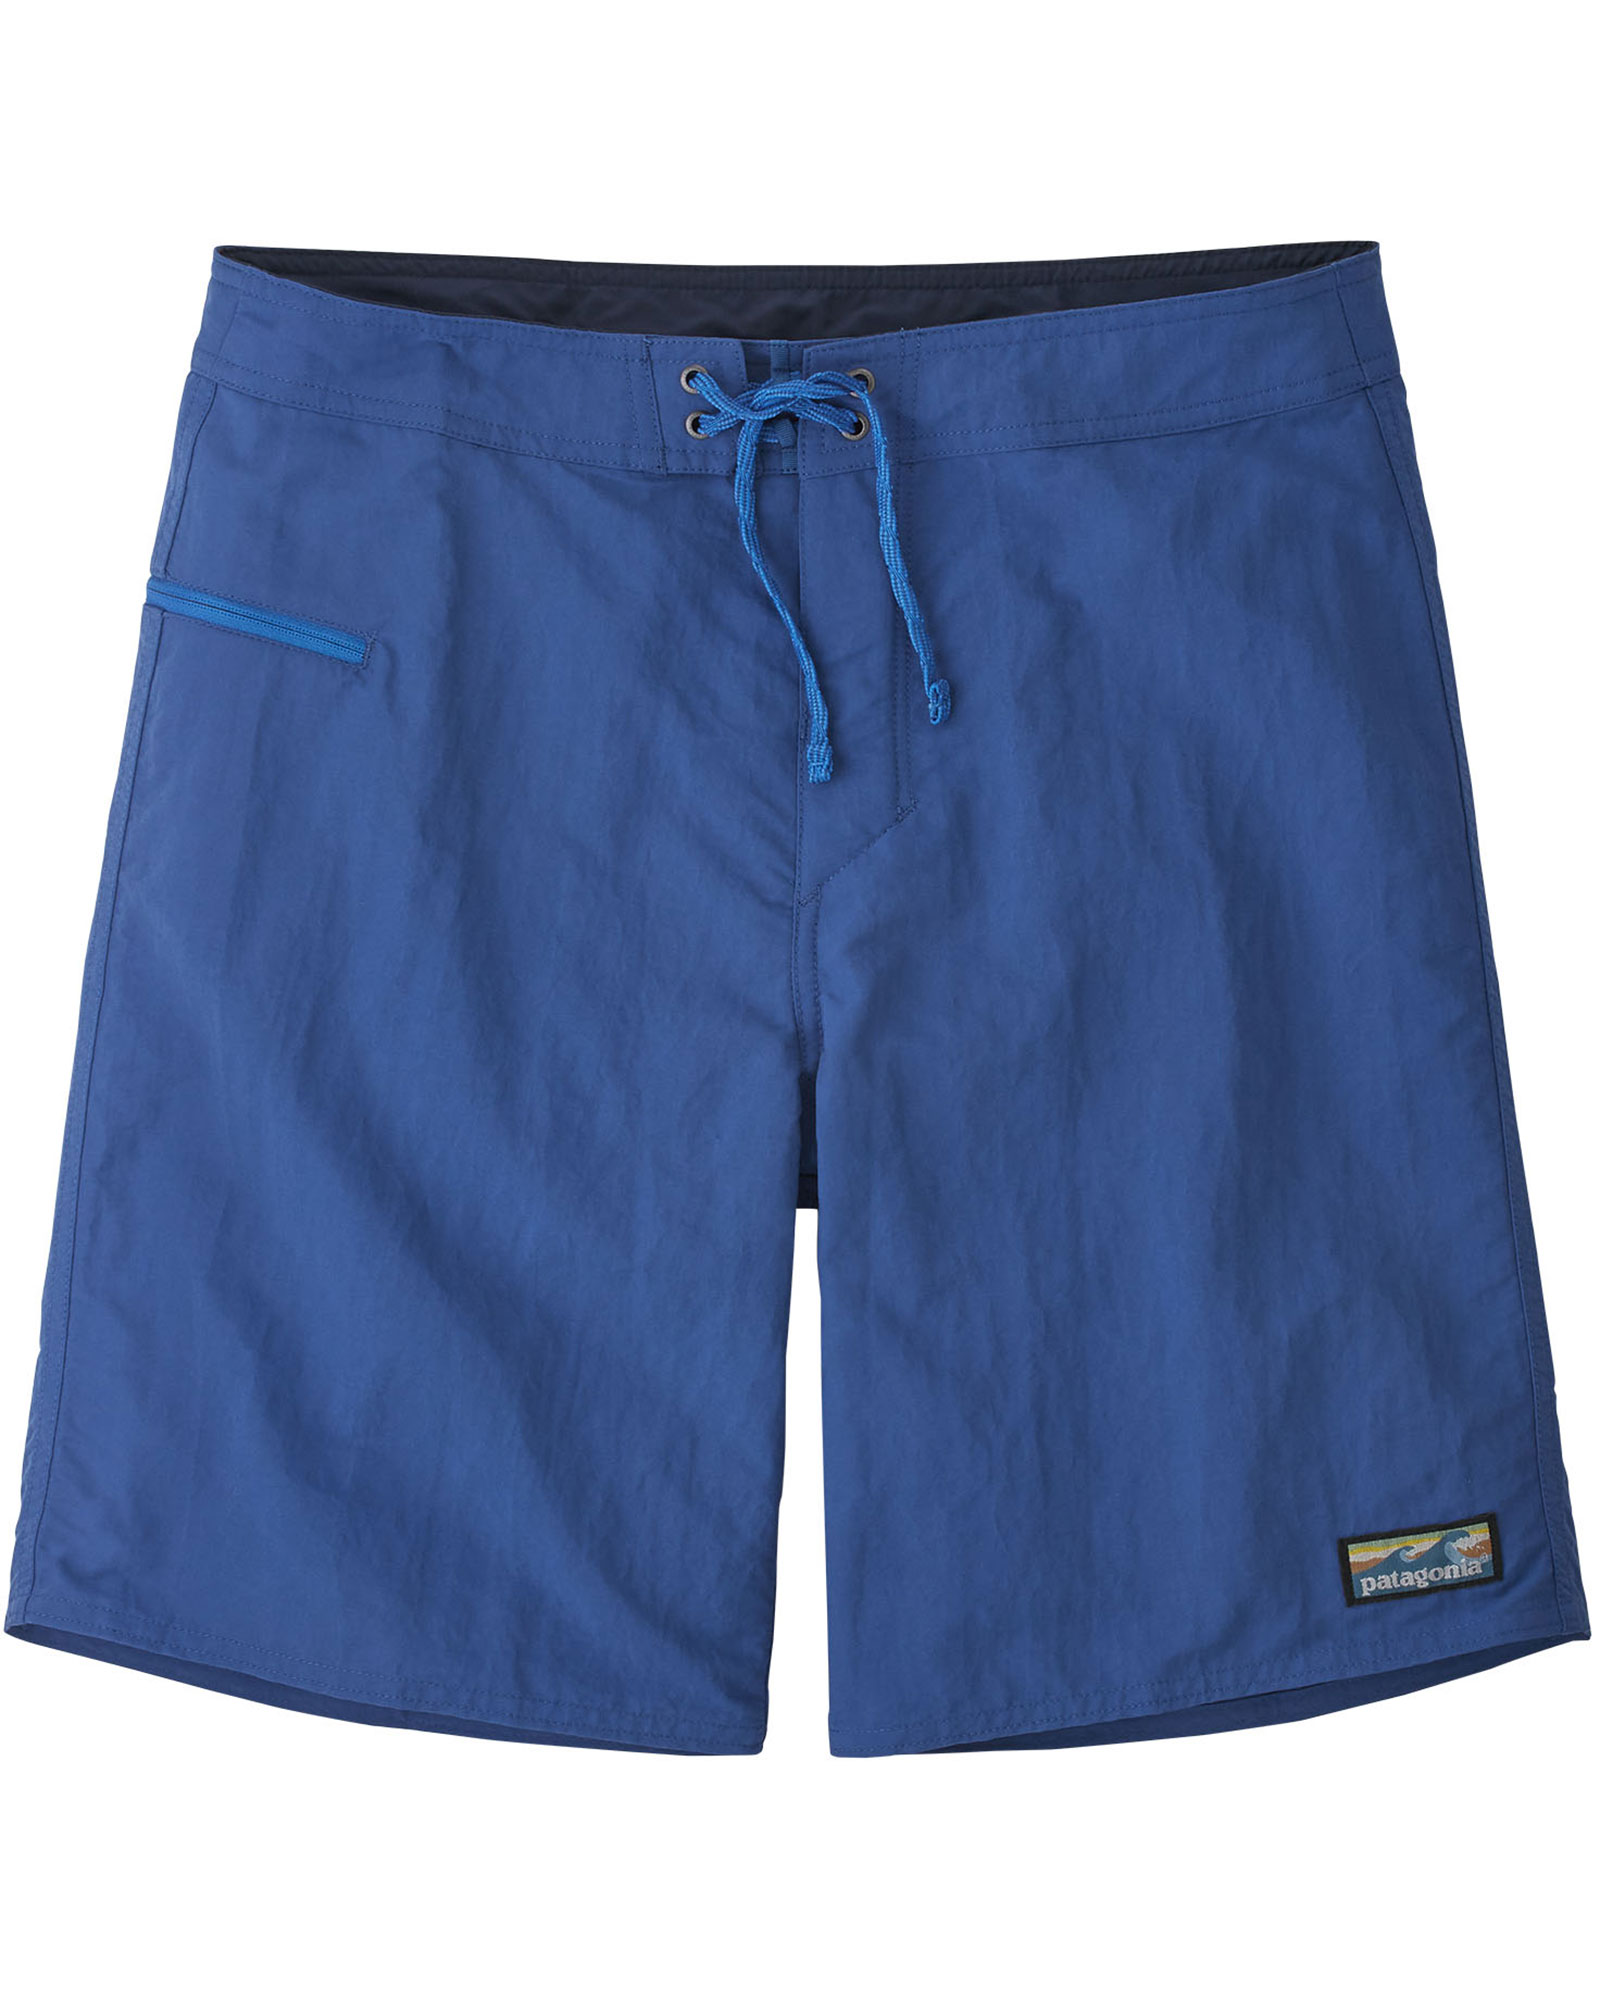 Patagonia Wavefarer Men’s 19" Board Shorts - Superior Blue 32"